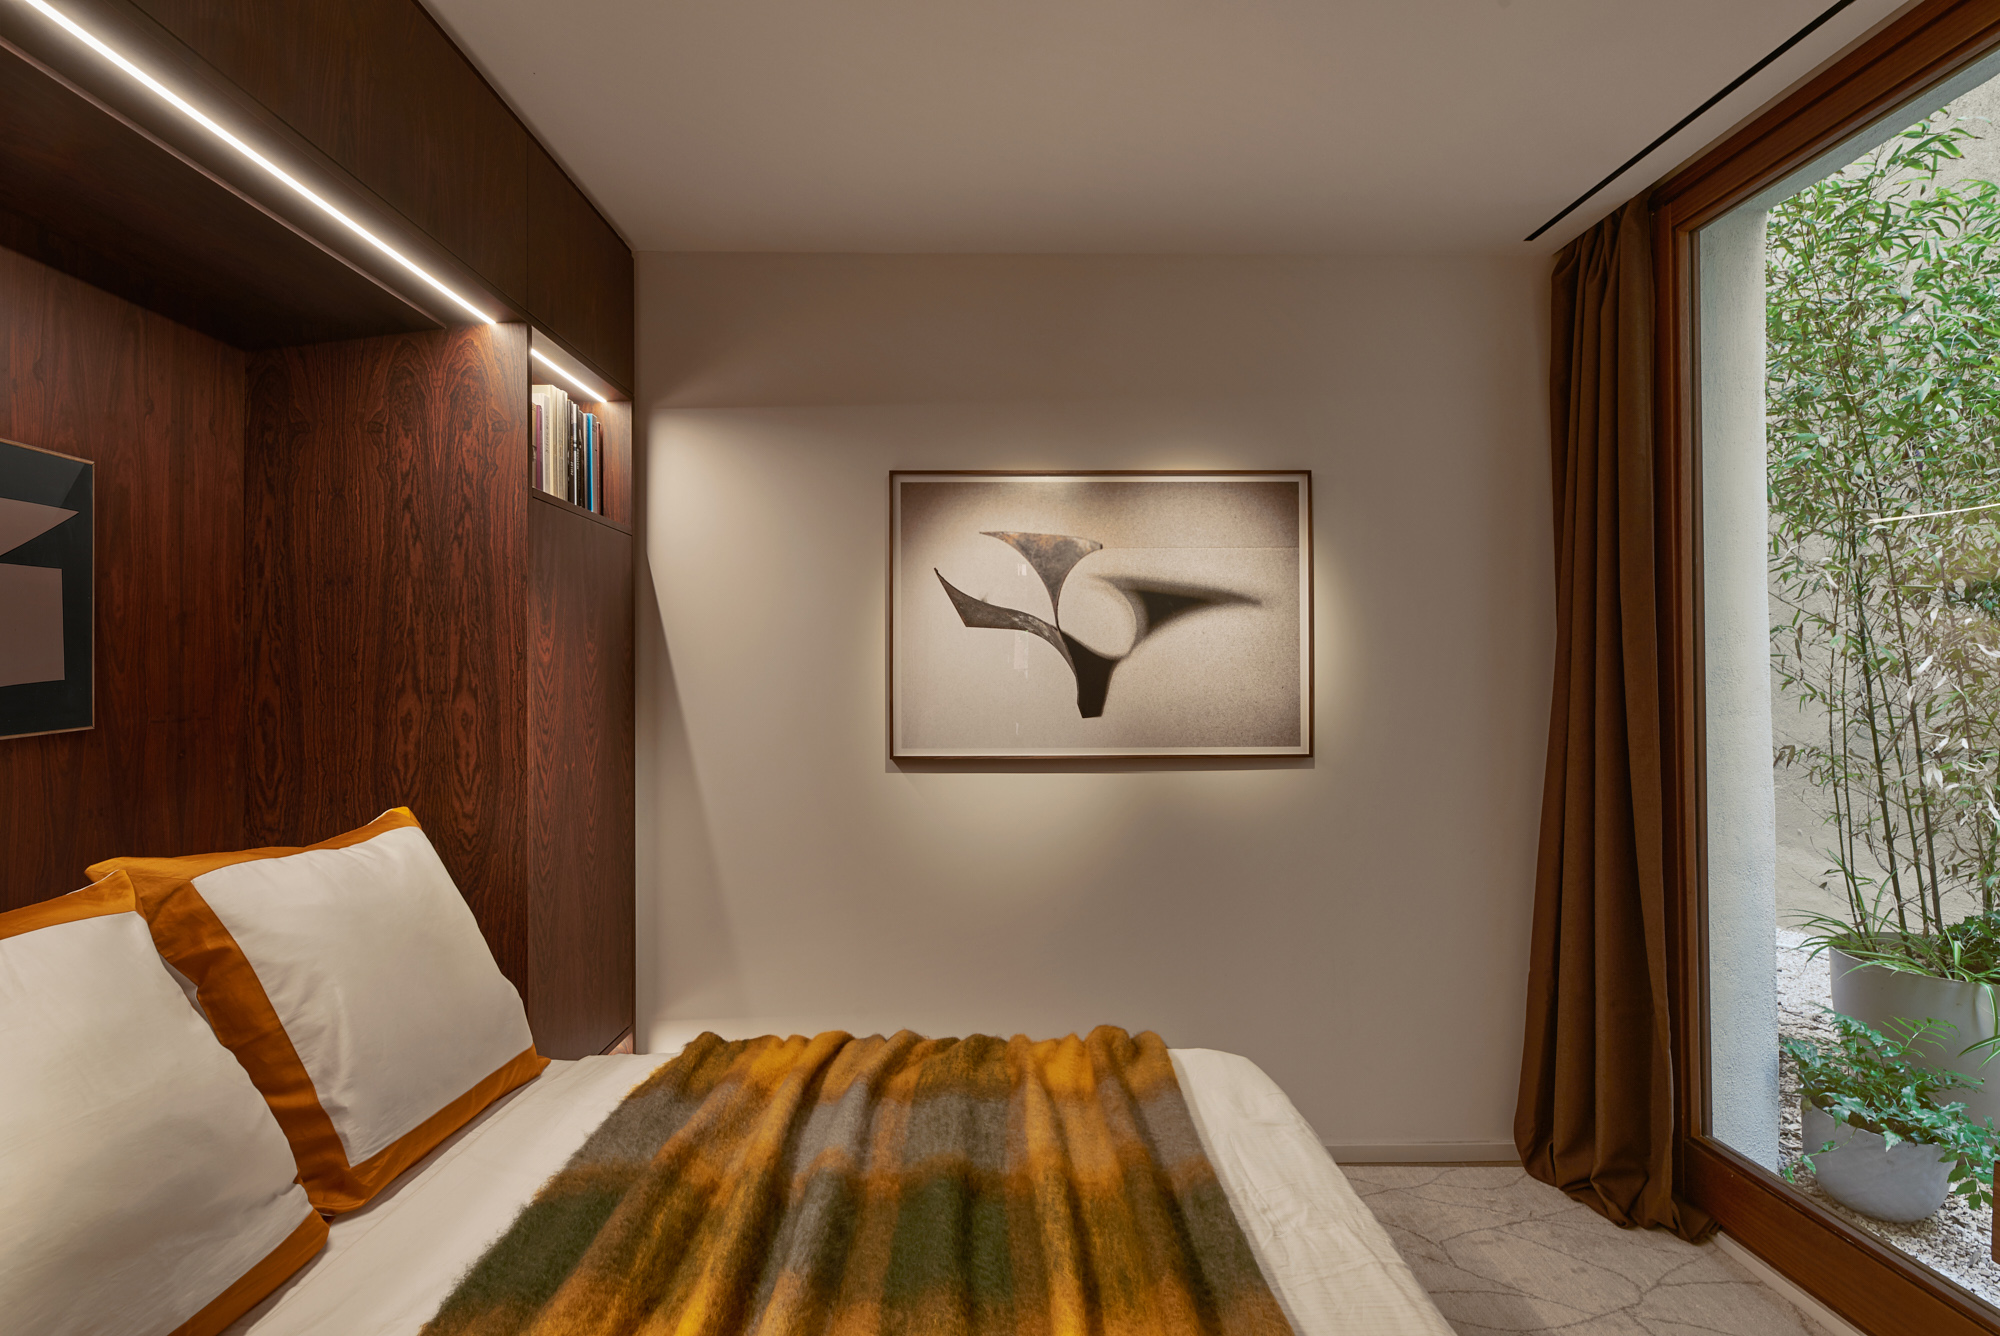 rardo architects in Madrid mid century modern space apartment refurbishment master bedroom